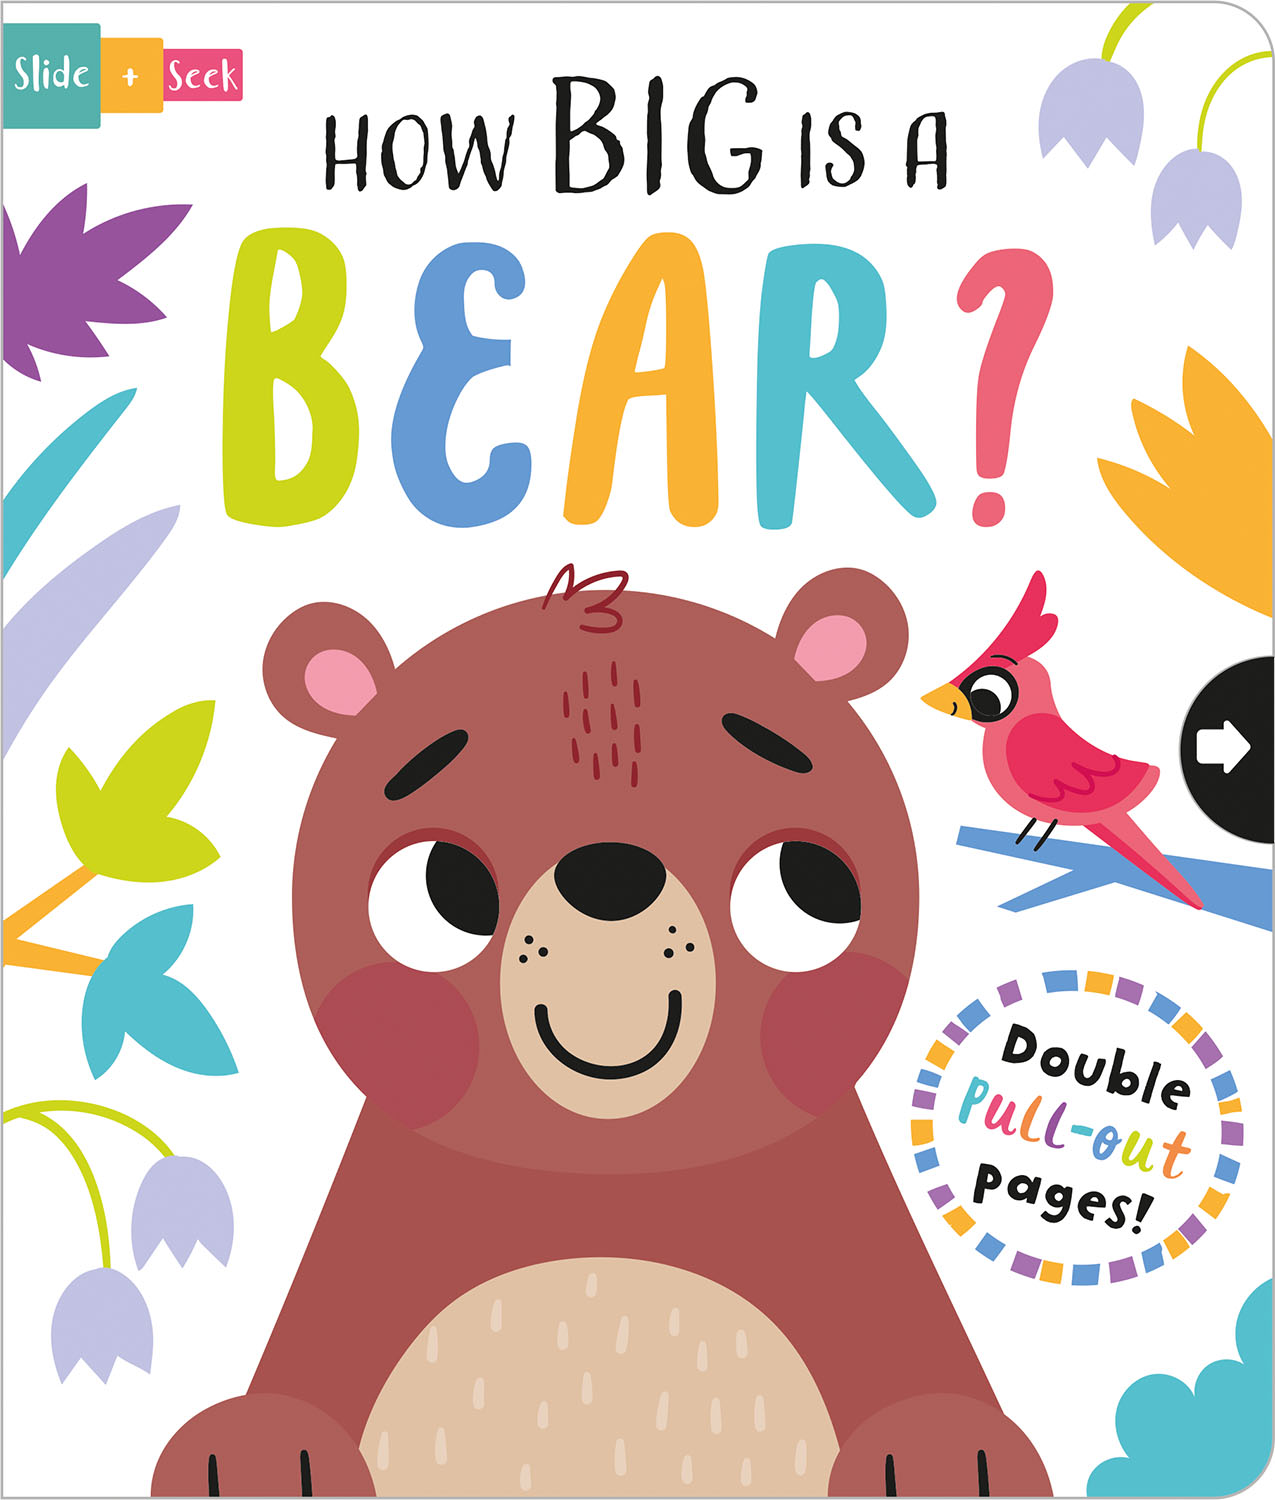 HOW BIG IS A BEAR?